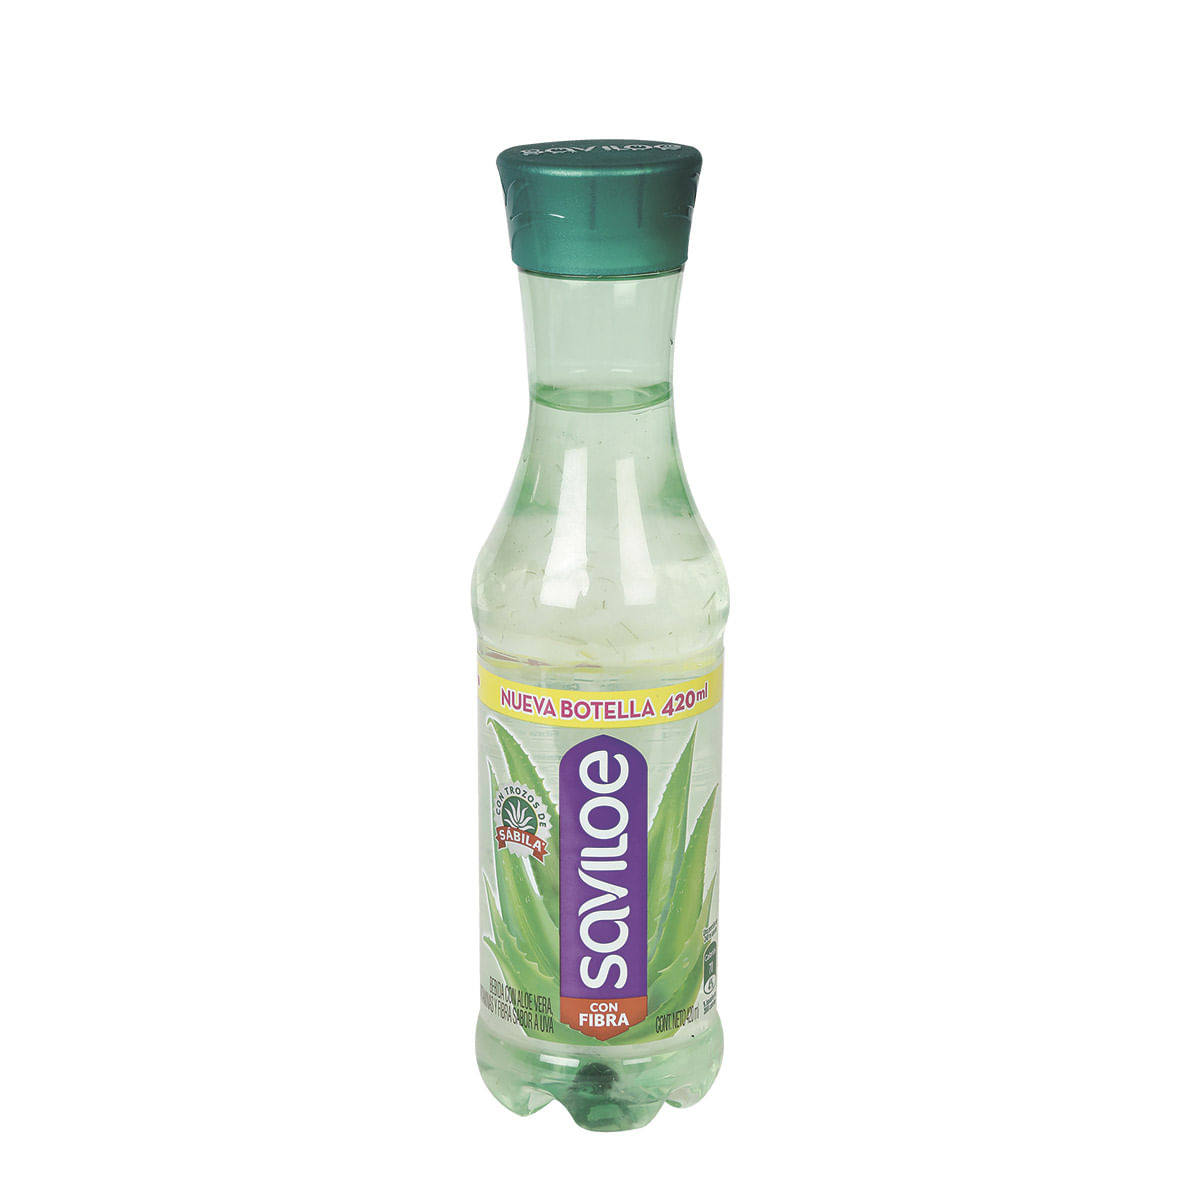 Agua Cristal Garrafa x 5 L - Mercados Colsubsidio